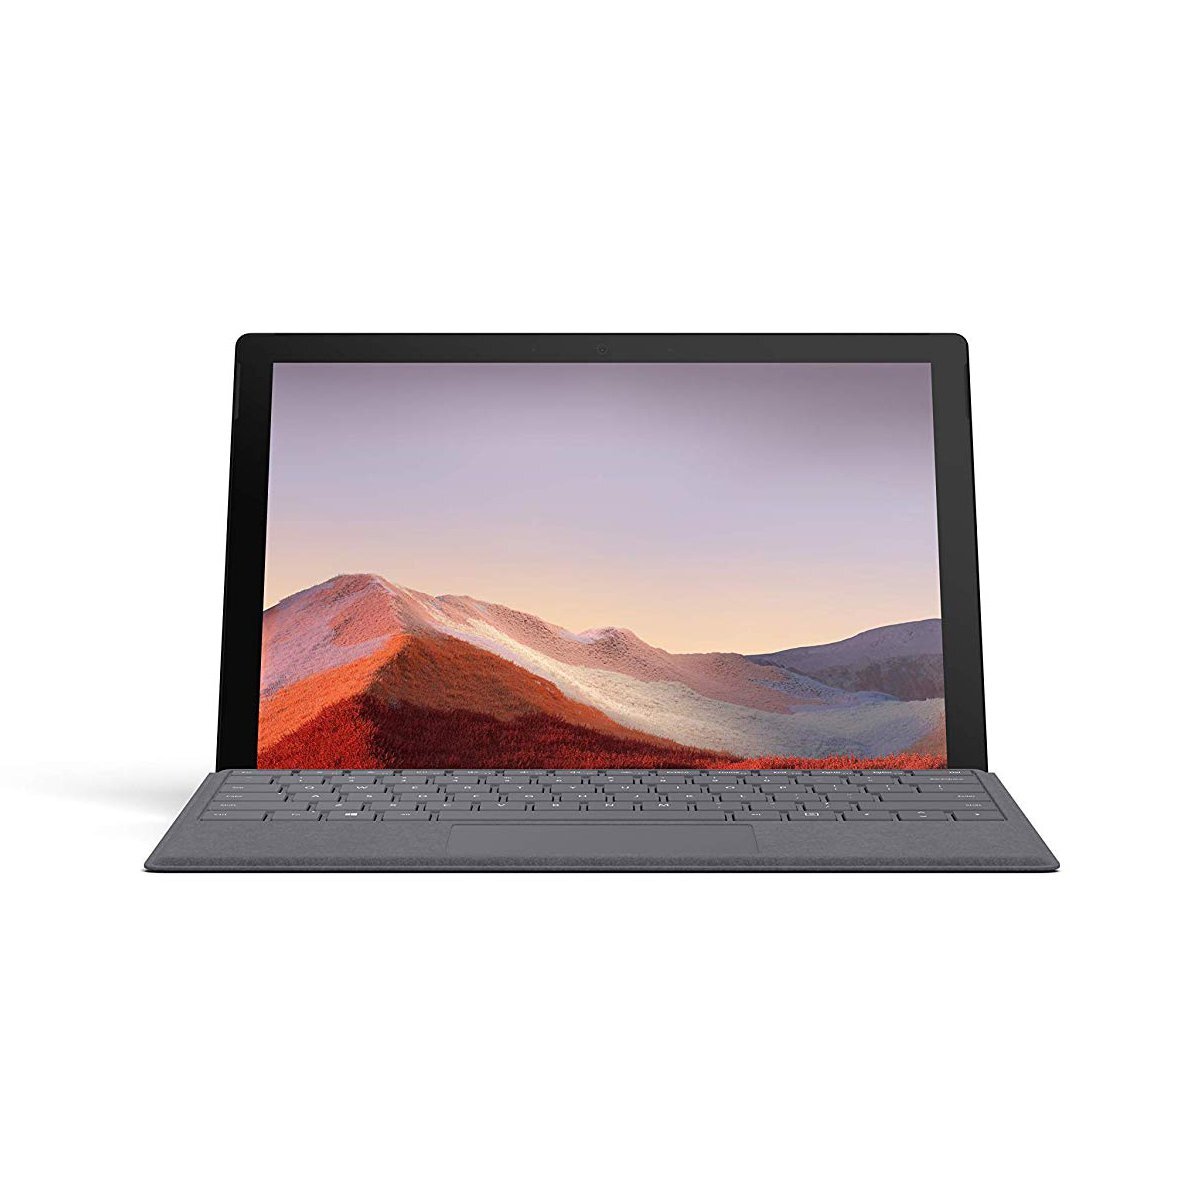 Laptop Microsoft Surface Pro 7 - Intel core i7-1065G7 , 16GB RAM, SSD 512GB, Intel Iris Plus Graphics, 12.3 inch